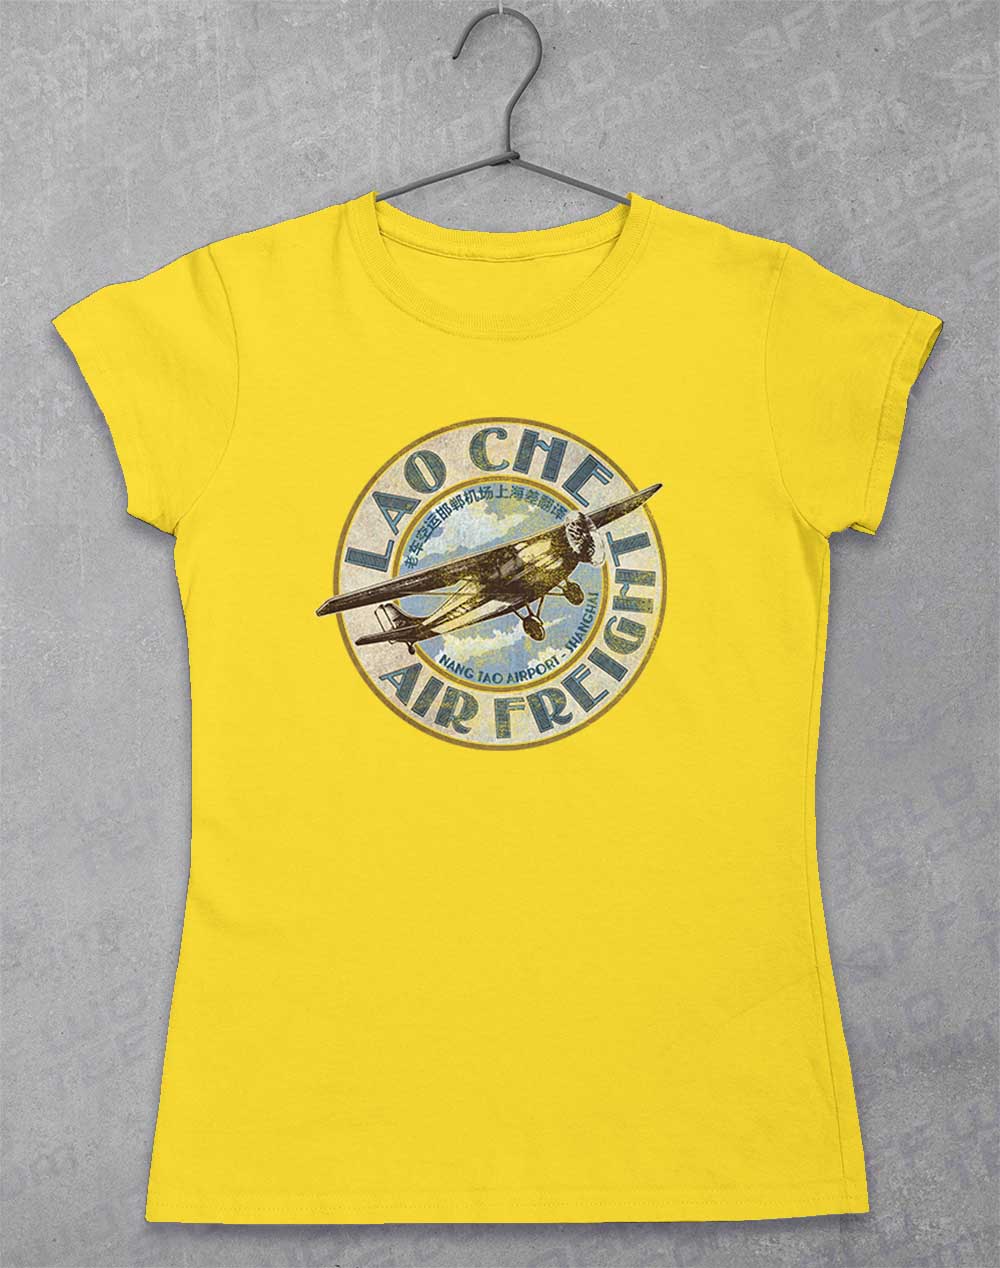 Daisy - Lao Che Air Freight Women's T-Shirt